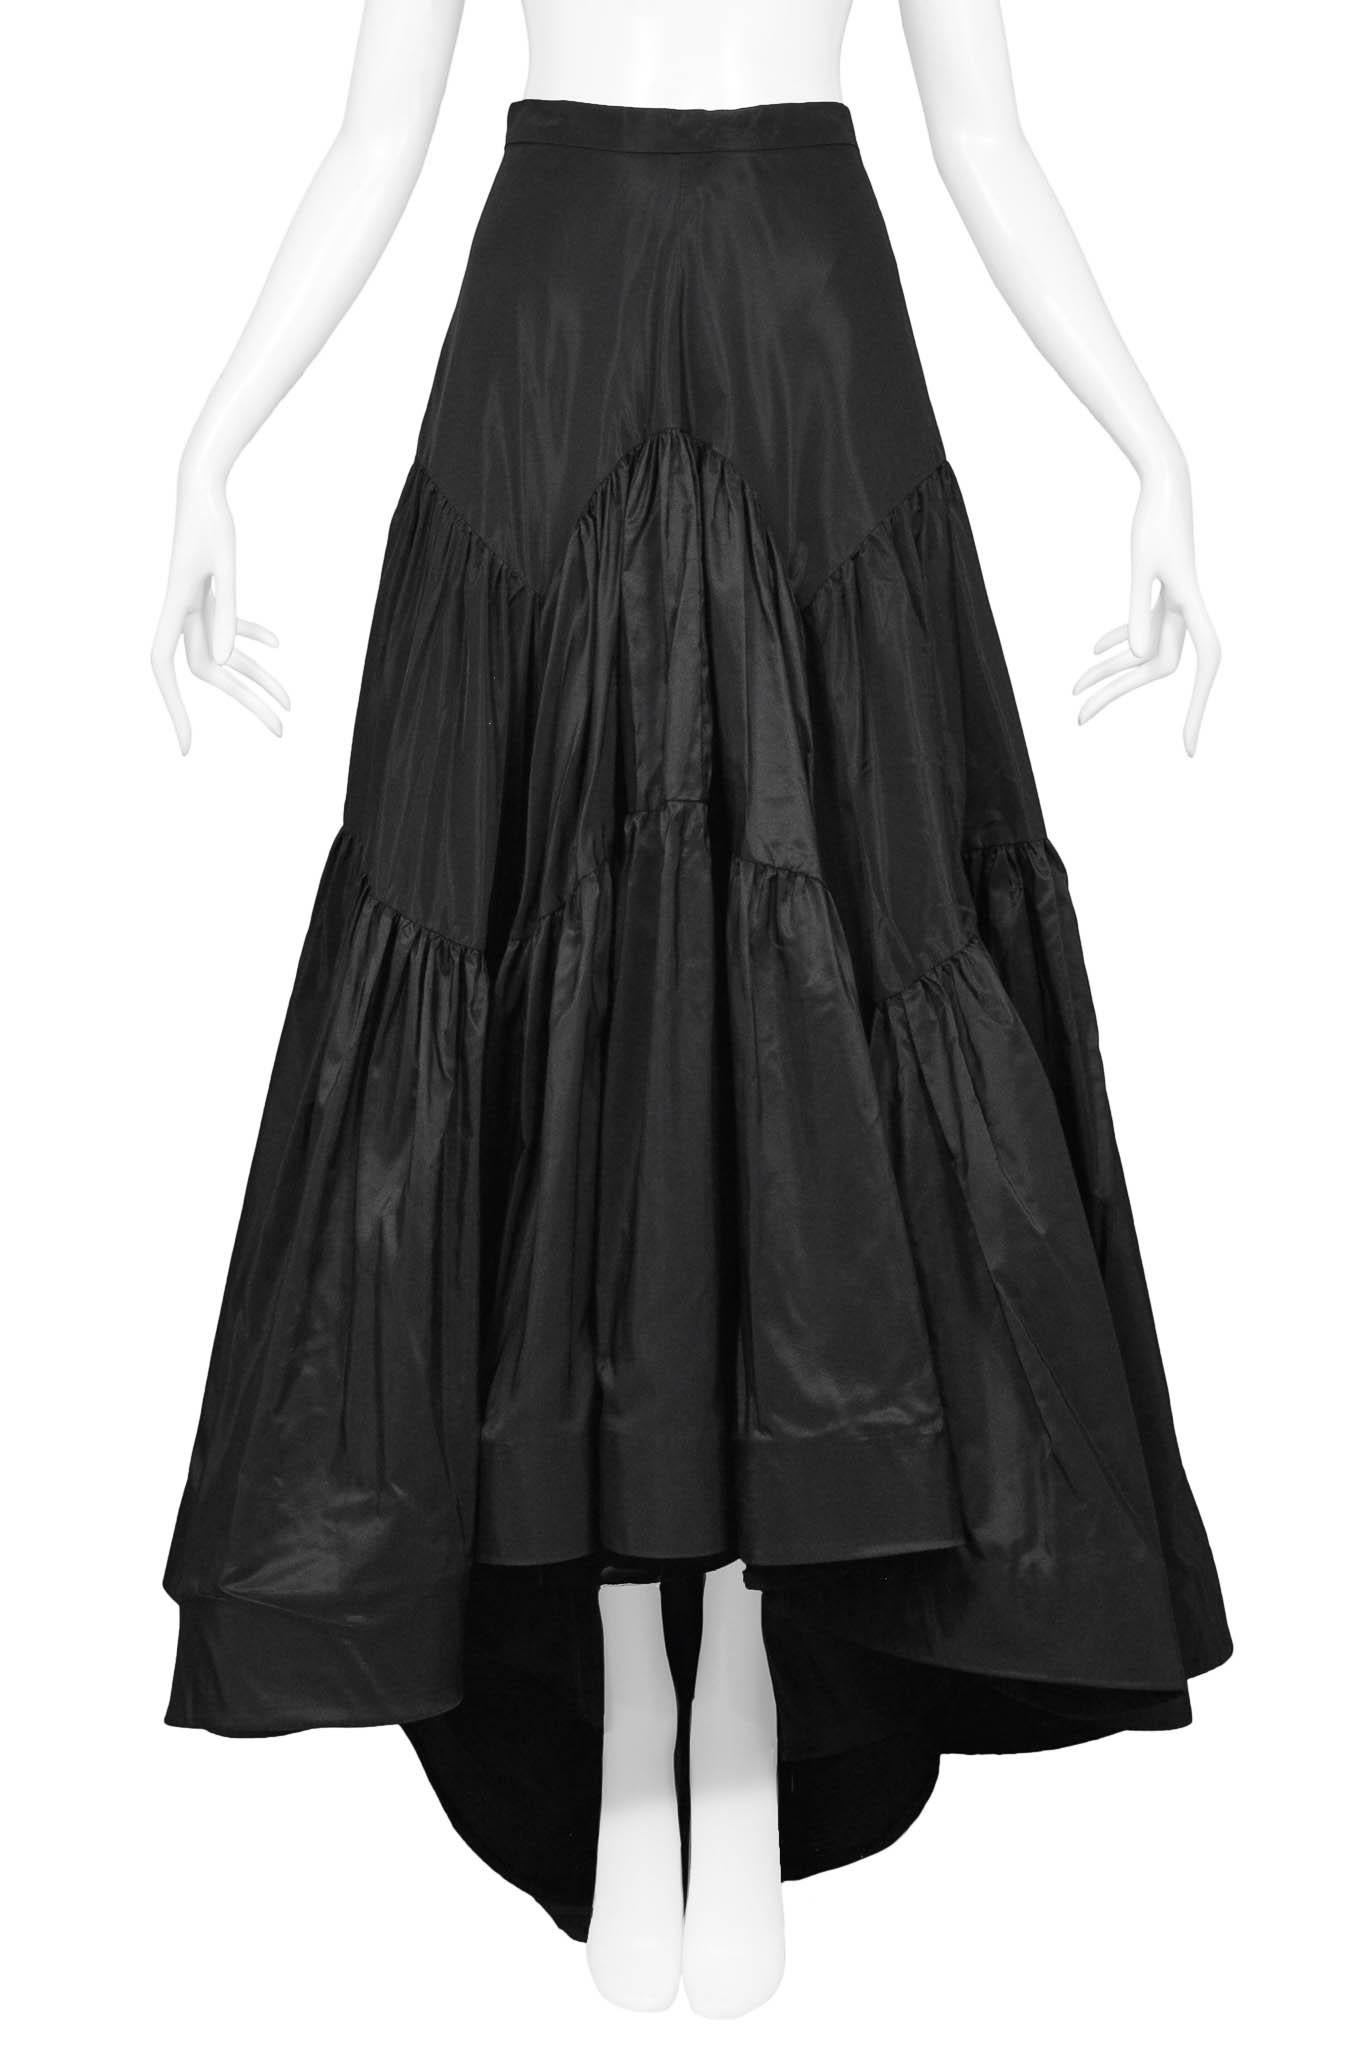 Women's Katy Rodriguez Black Ball Gown Skirt For Sale